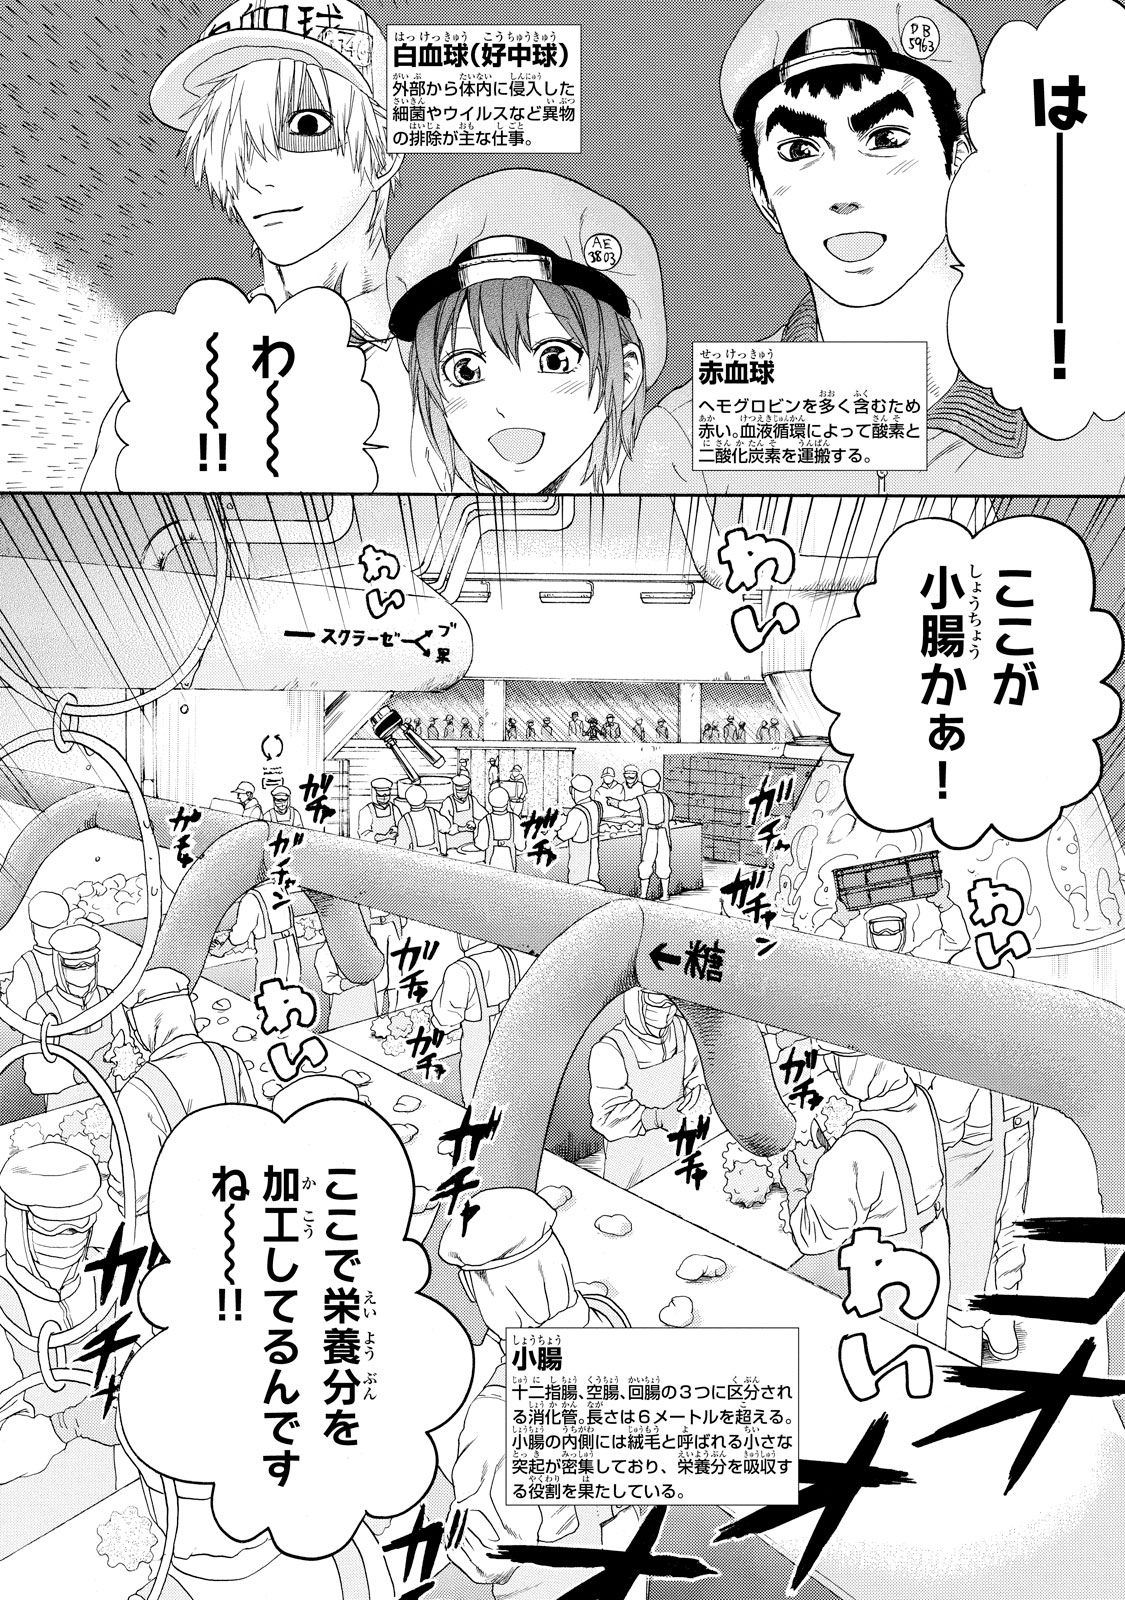 Hataraku Saibou - Chapter 19 - Page 2